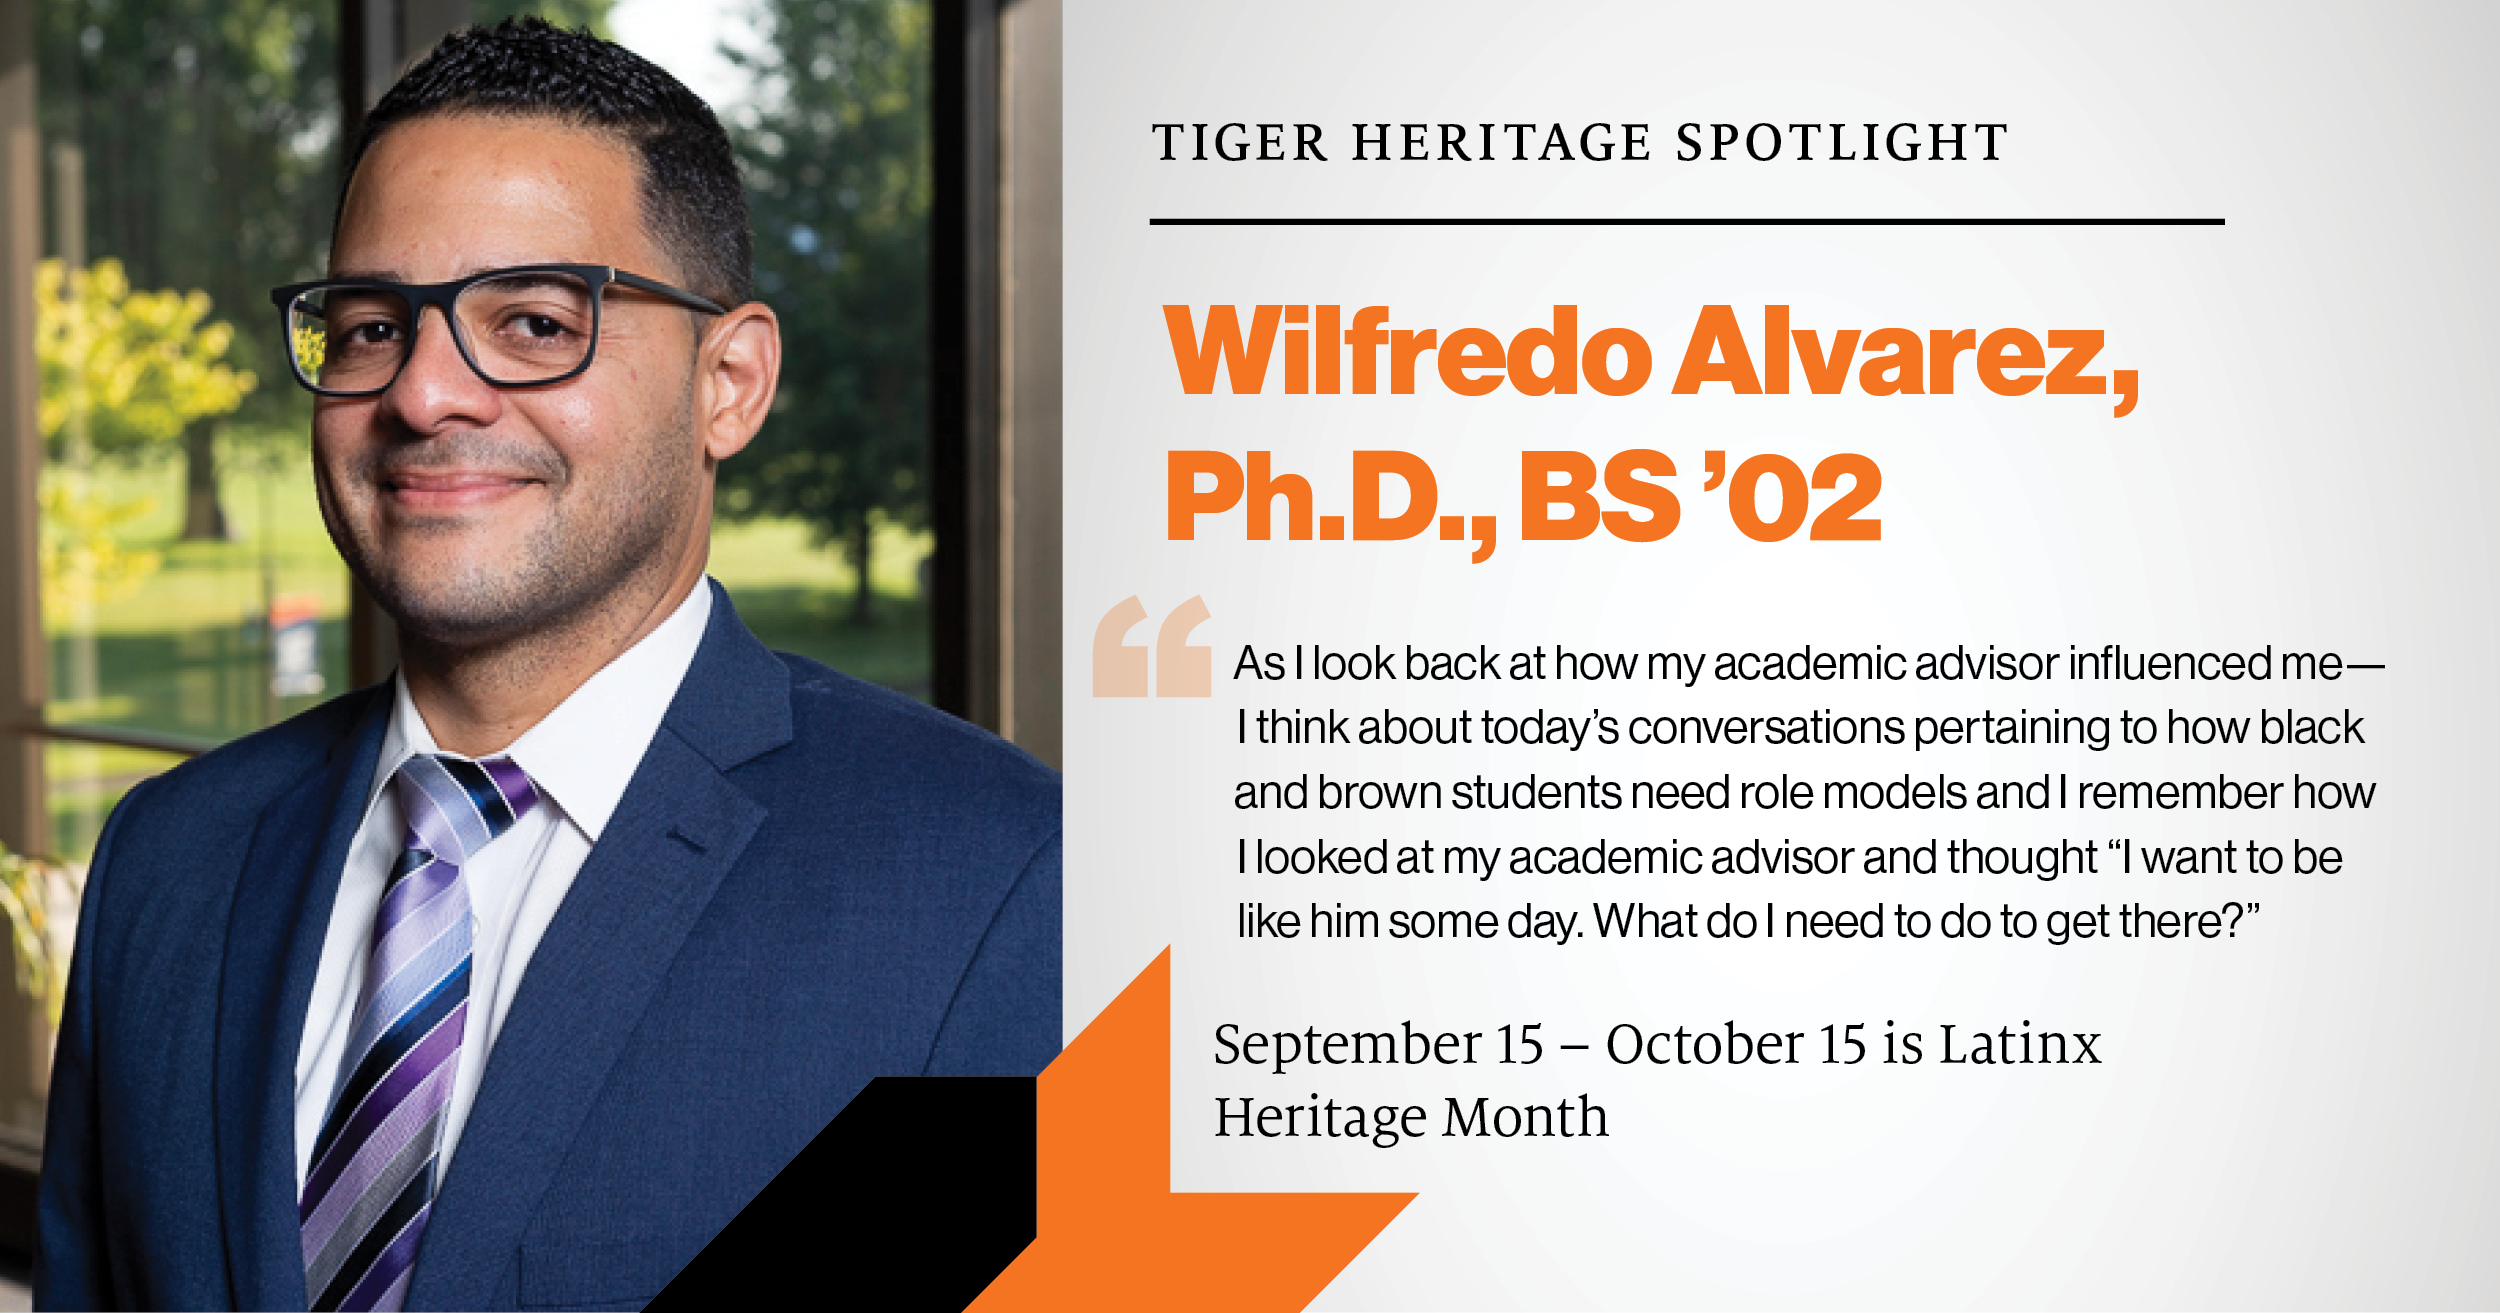 Wilfredo Alvarez, Ph.D., BS ’02 